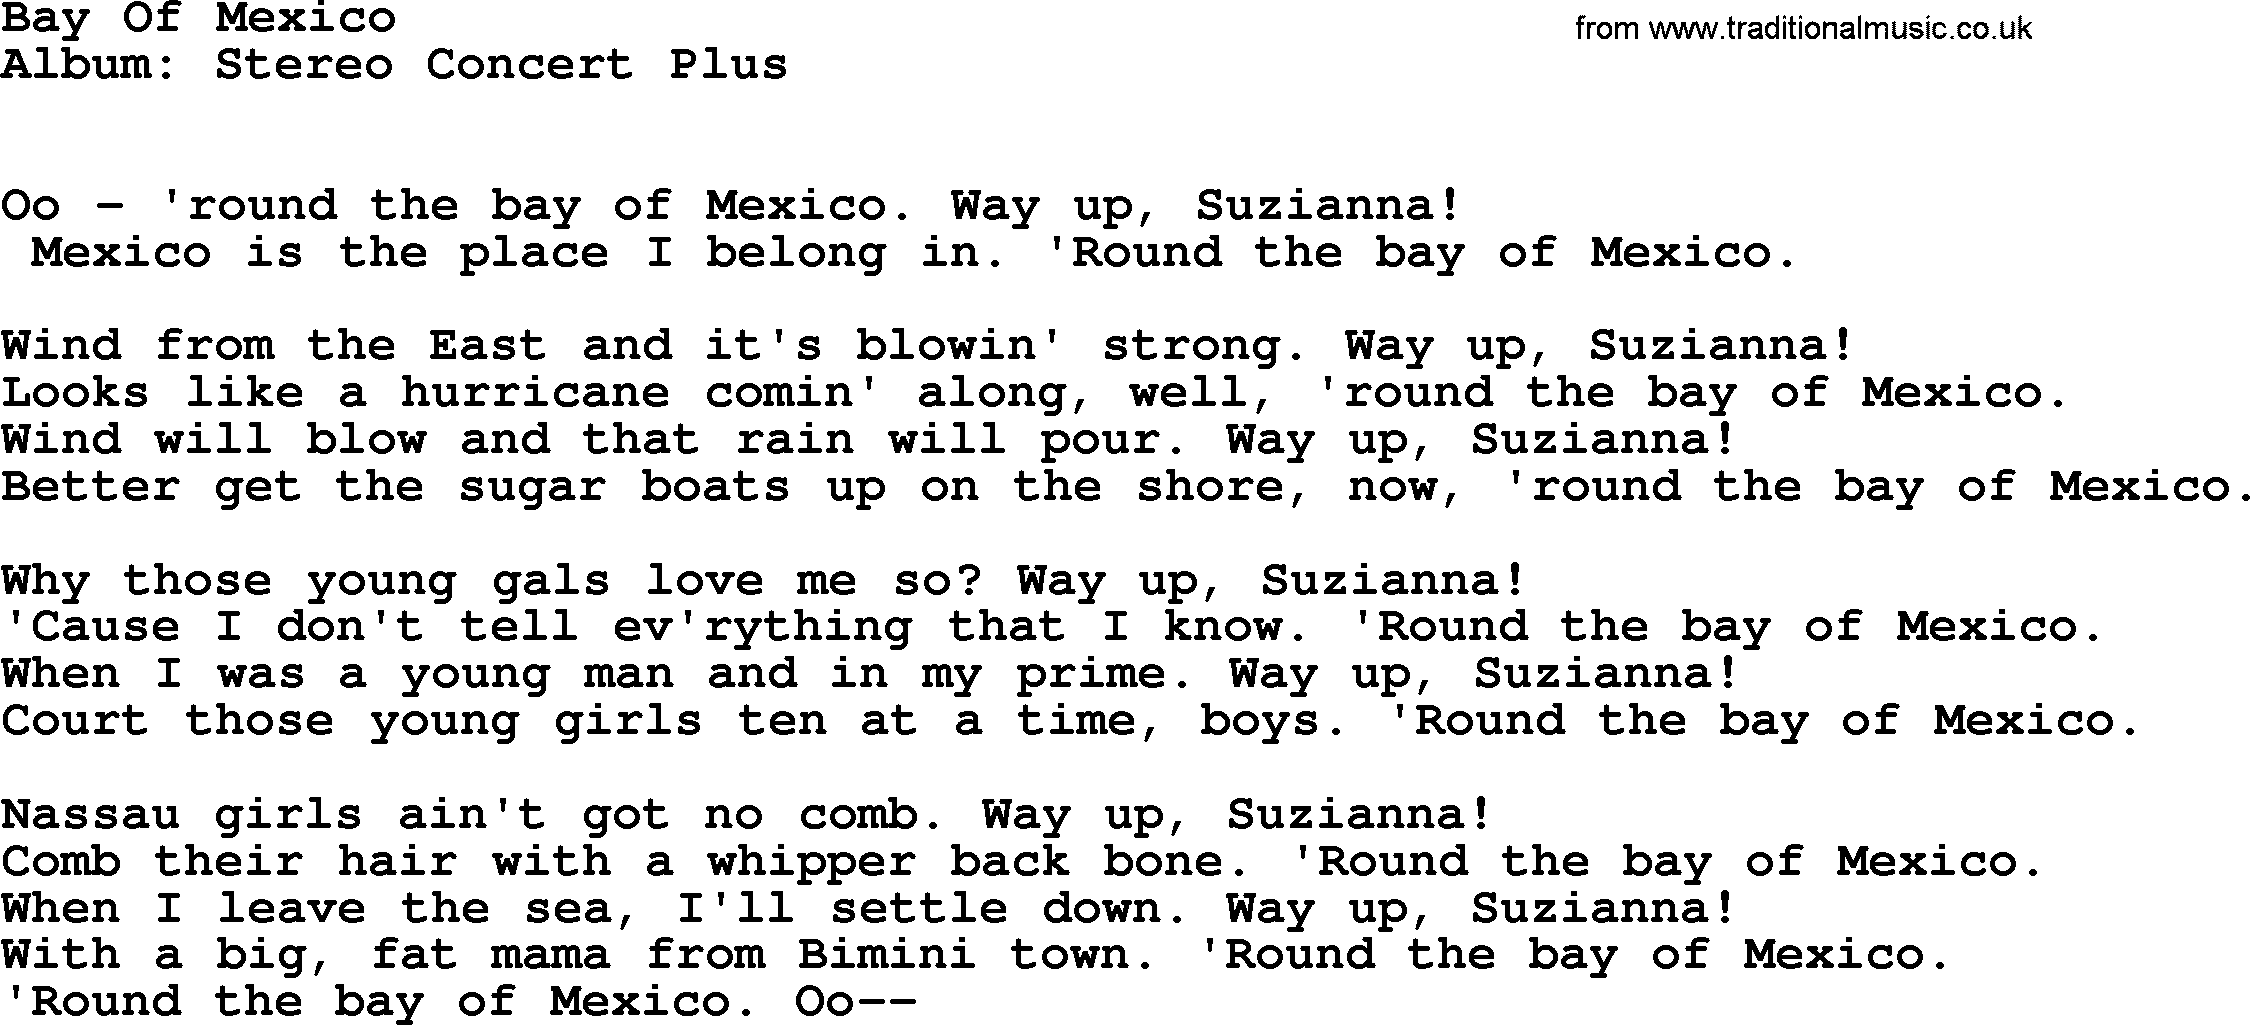 Kingston Trio song Bay Of Mexico, lyrics